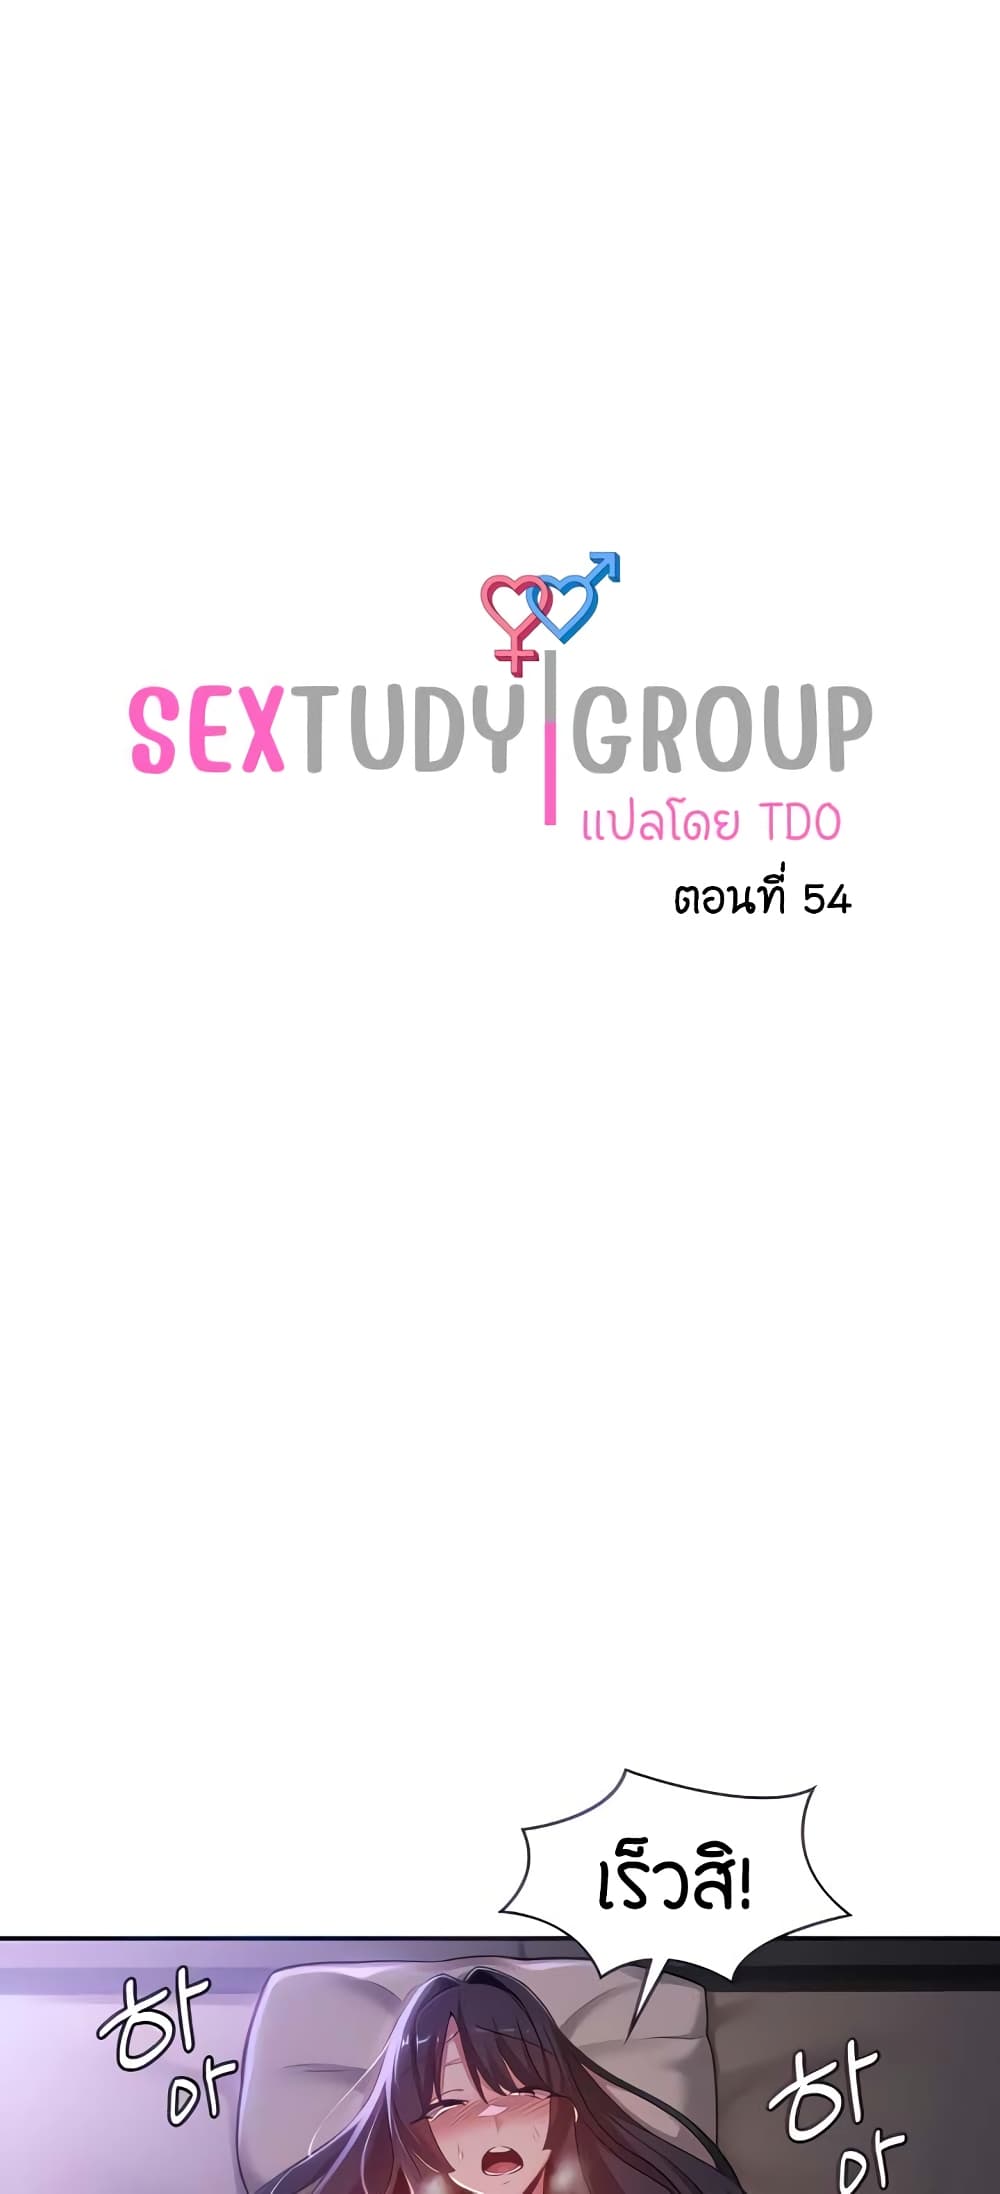 Sextudy Group 54 01